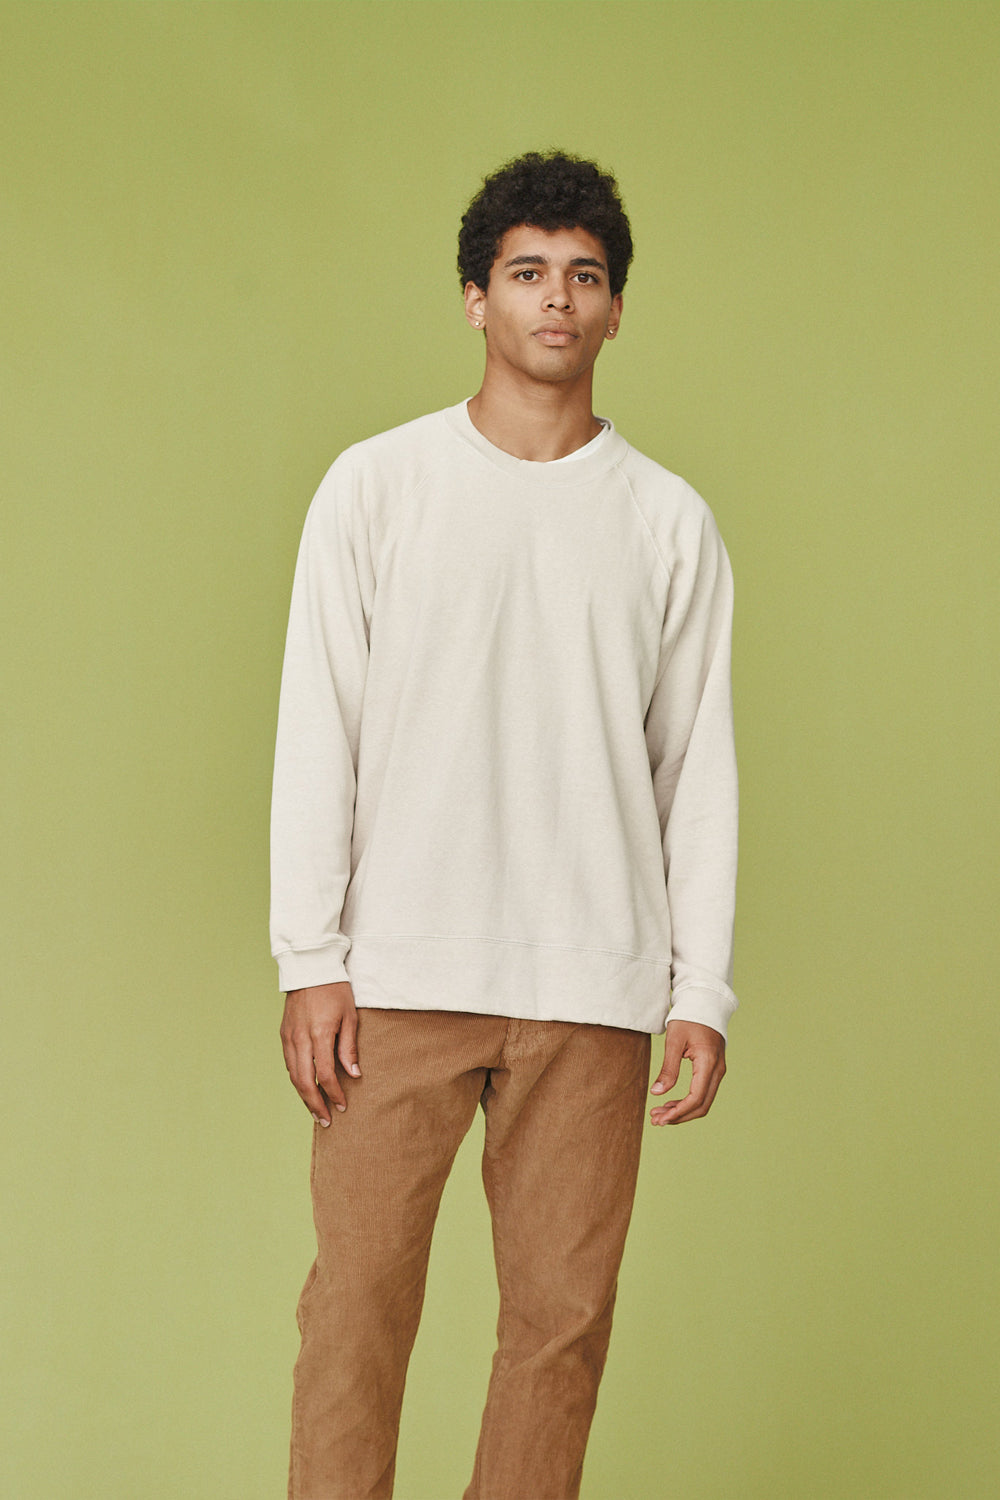 Men's Tops Collection - Hoodies, TShirts, Sweatshirts